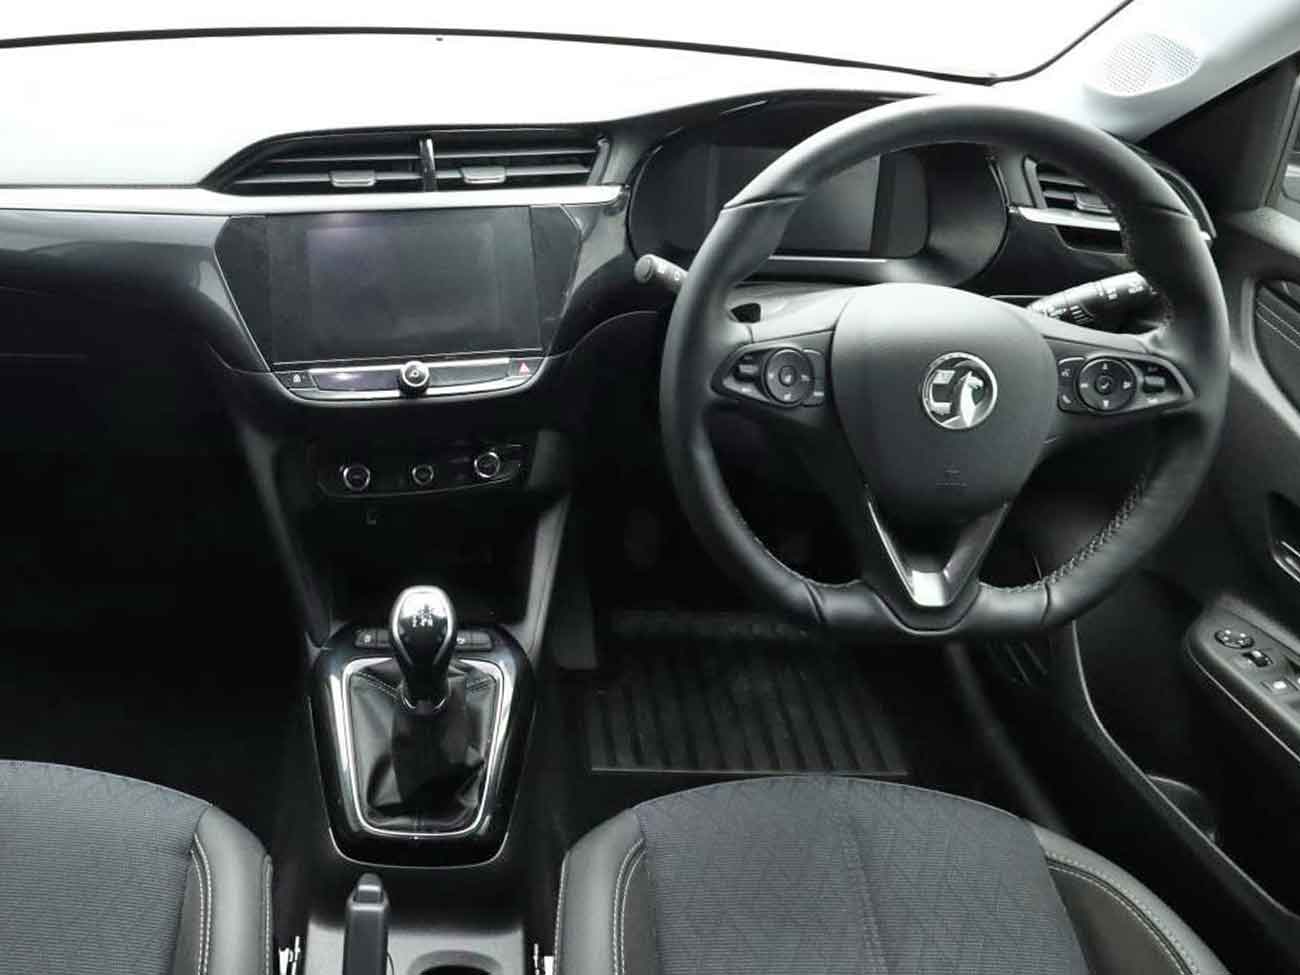 Interior view of Vauxhall Corsa